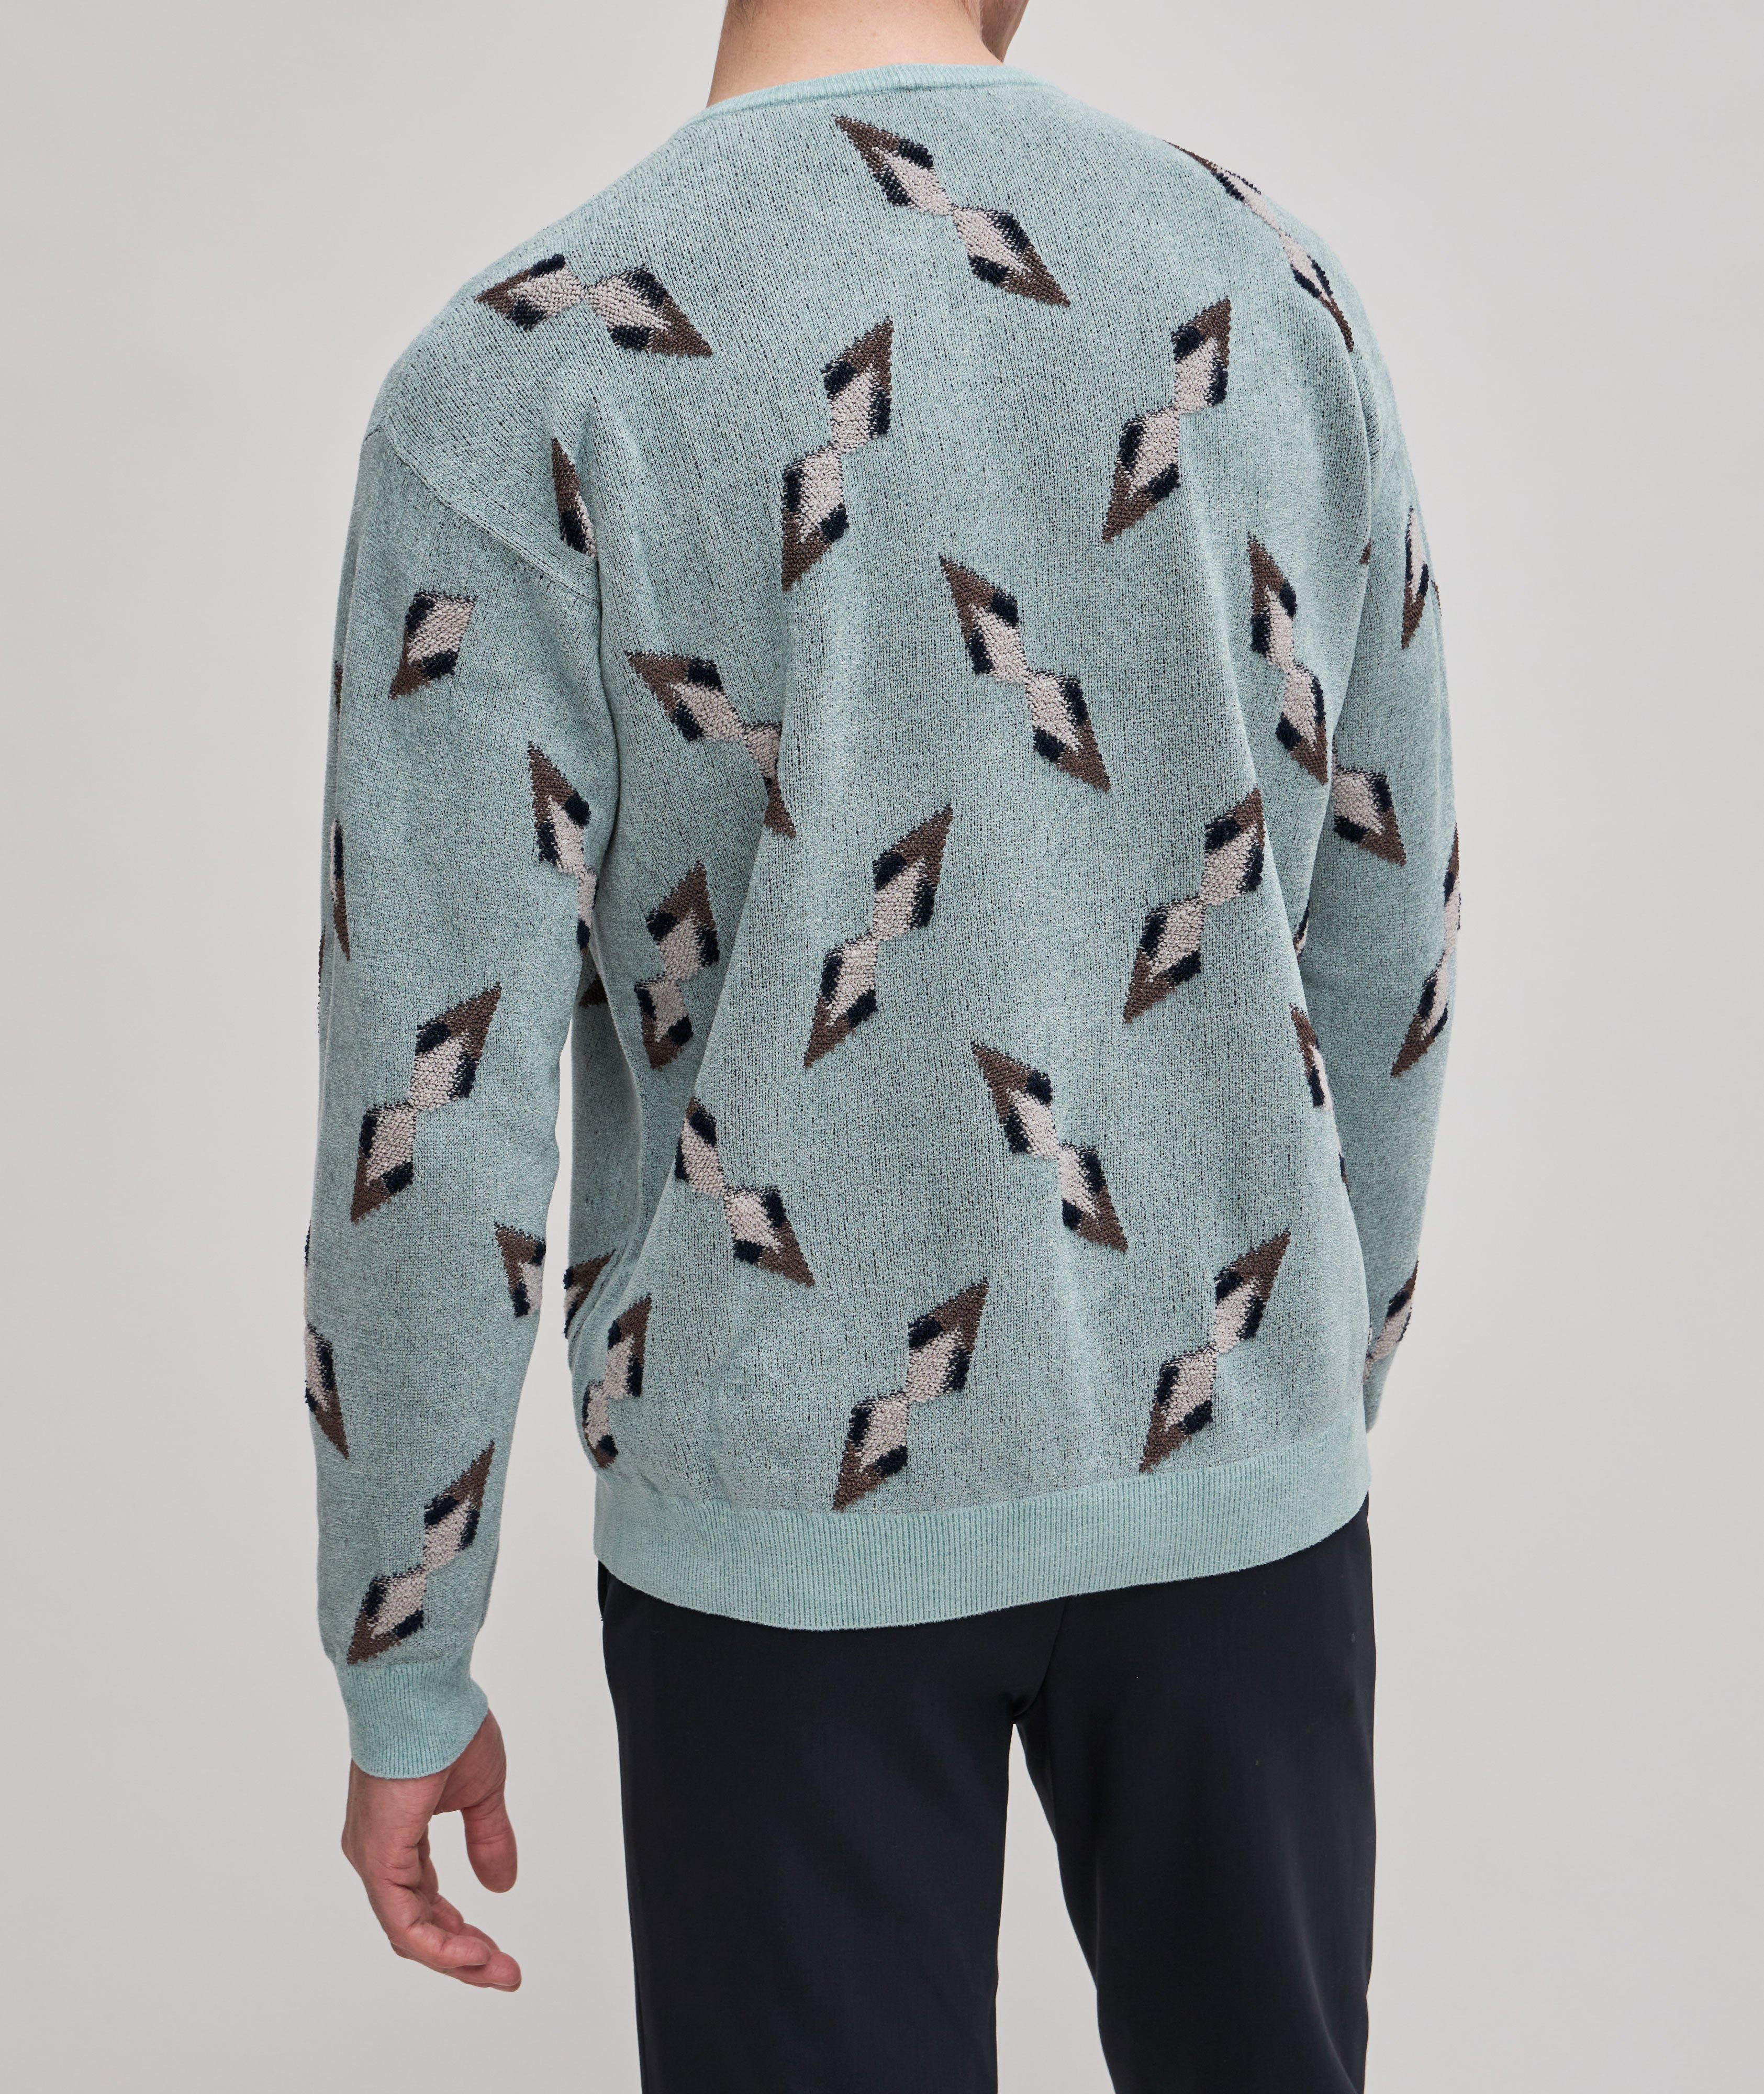 Retro Geometric Jacquard Print Sweater image 2